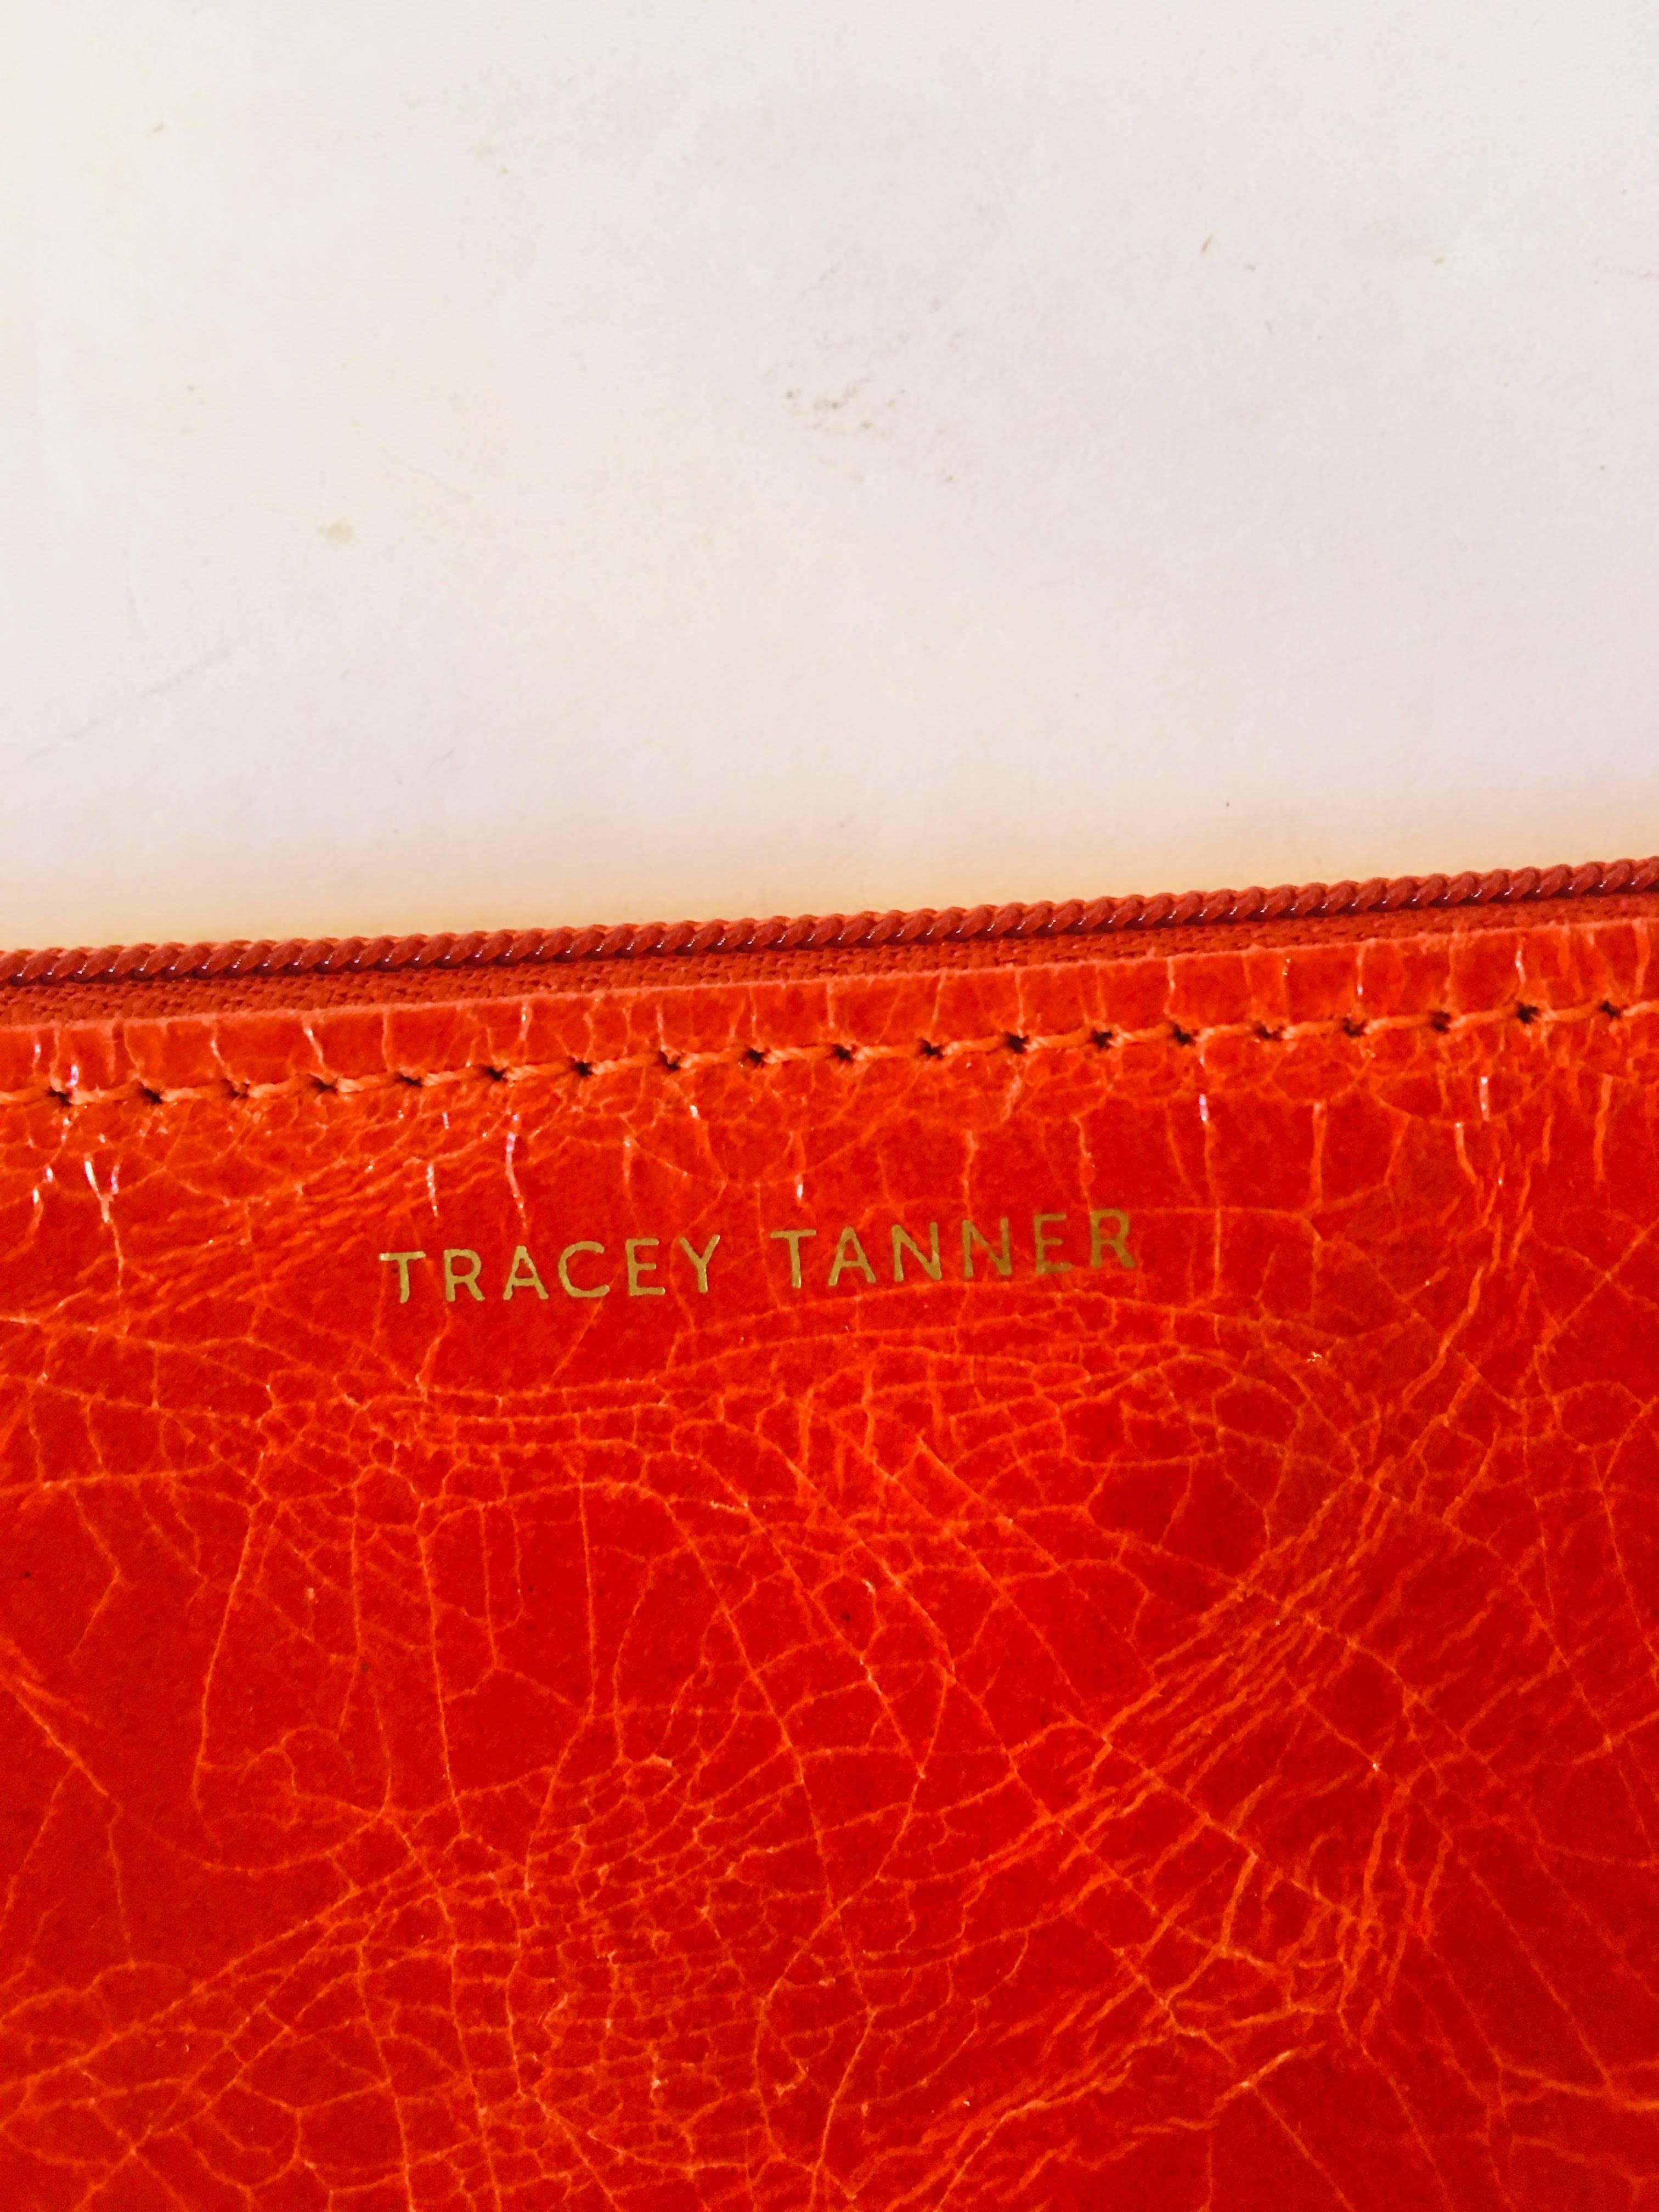 Tracey Tanner Zip Pouch in Orange, 